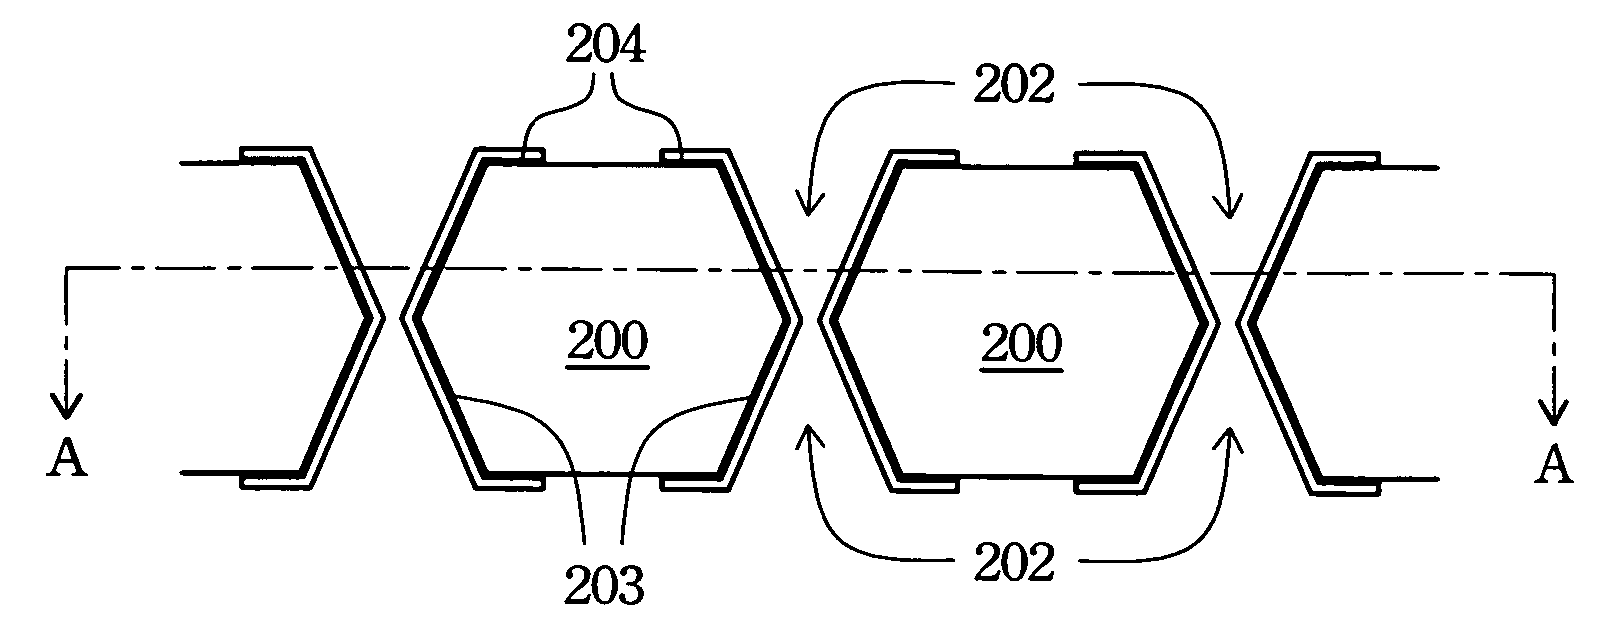 Flexible land grid array connector